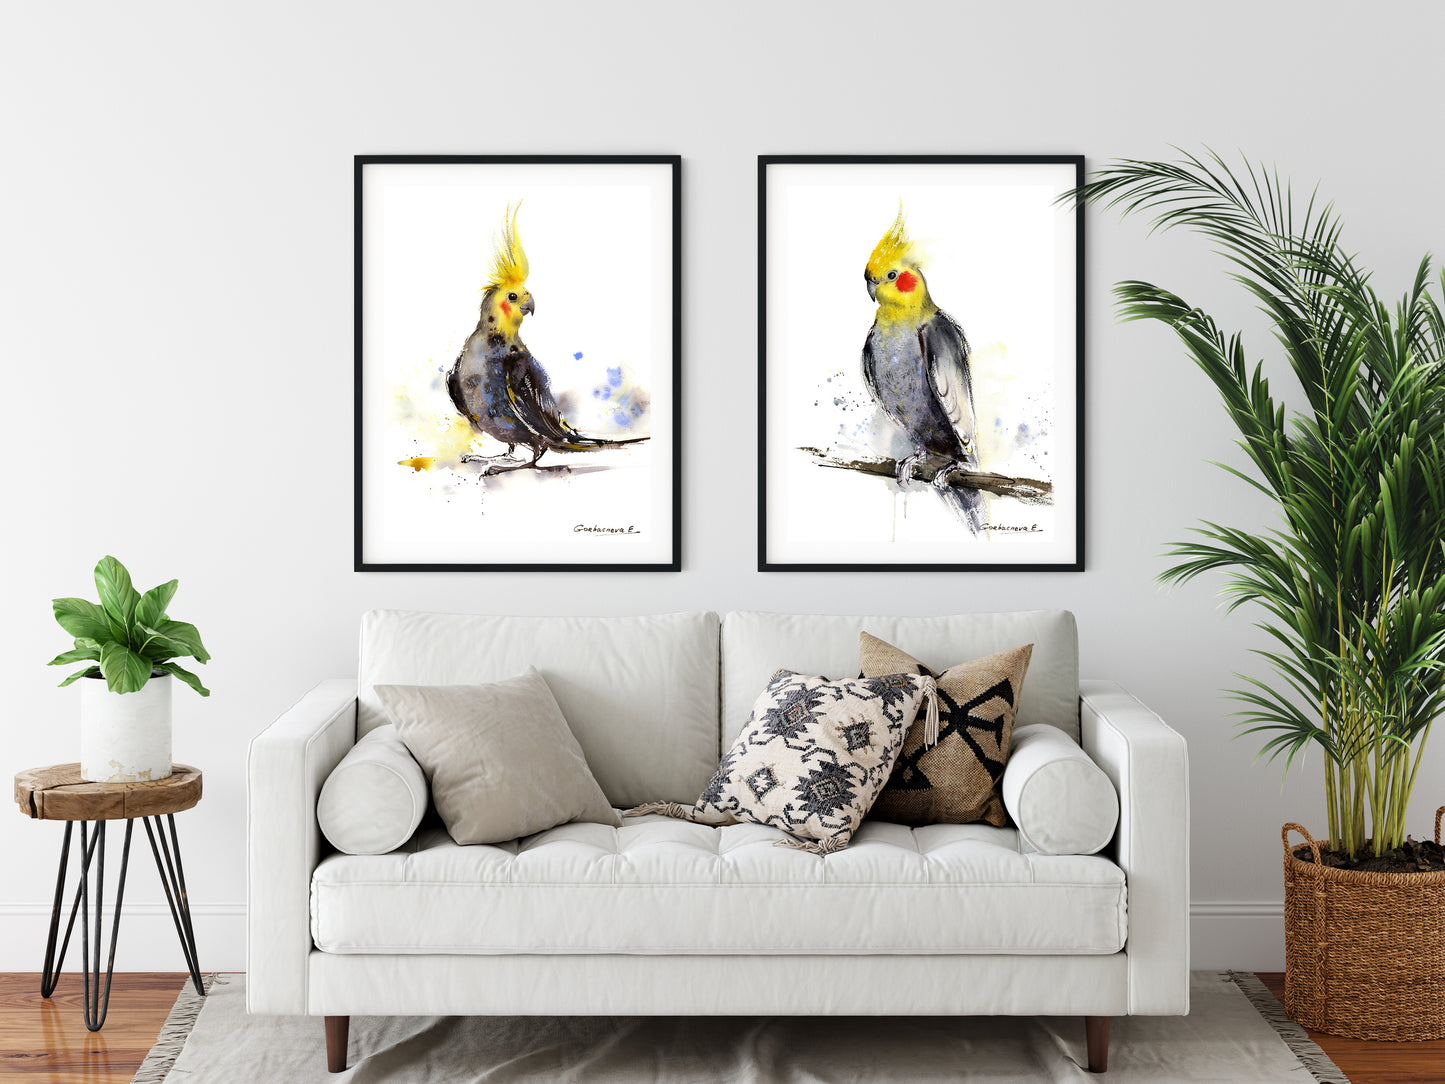 Parrot Set of 2 Art Prints, Watercolor Bird Painting, Cockatiel Wall Art, Bedroom Wall Decor, Yellow Gray Tropical Birds